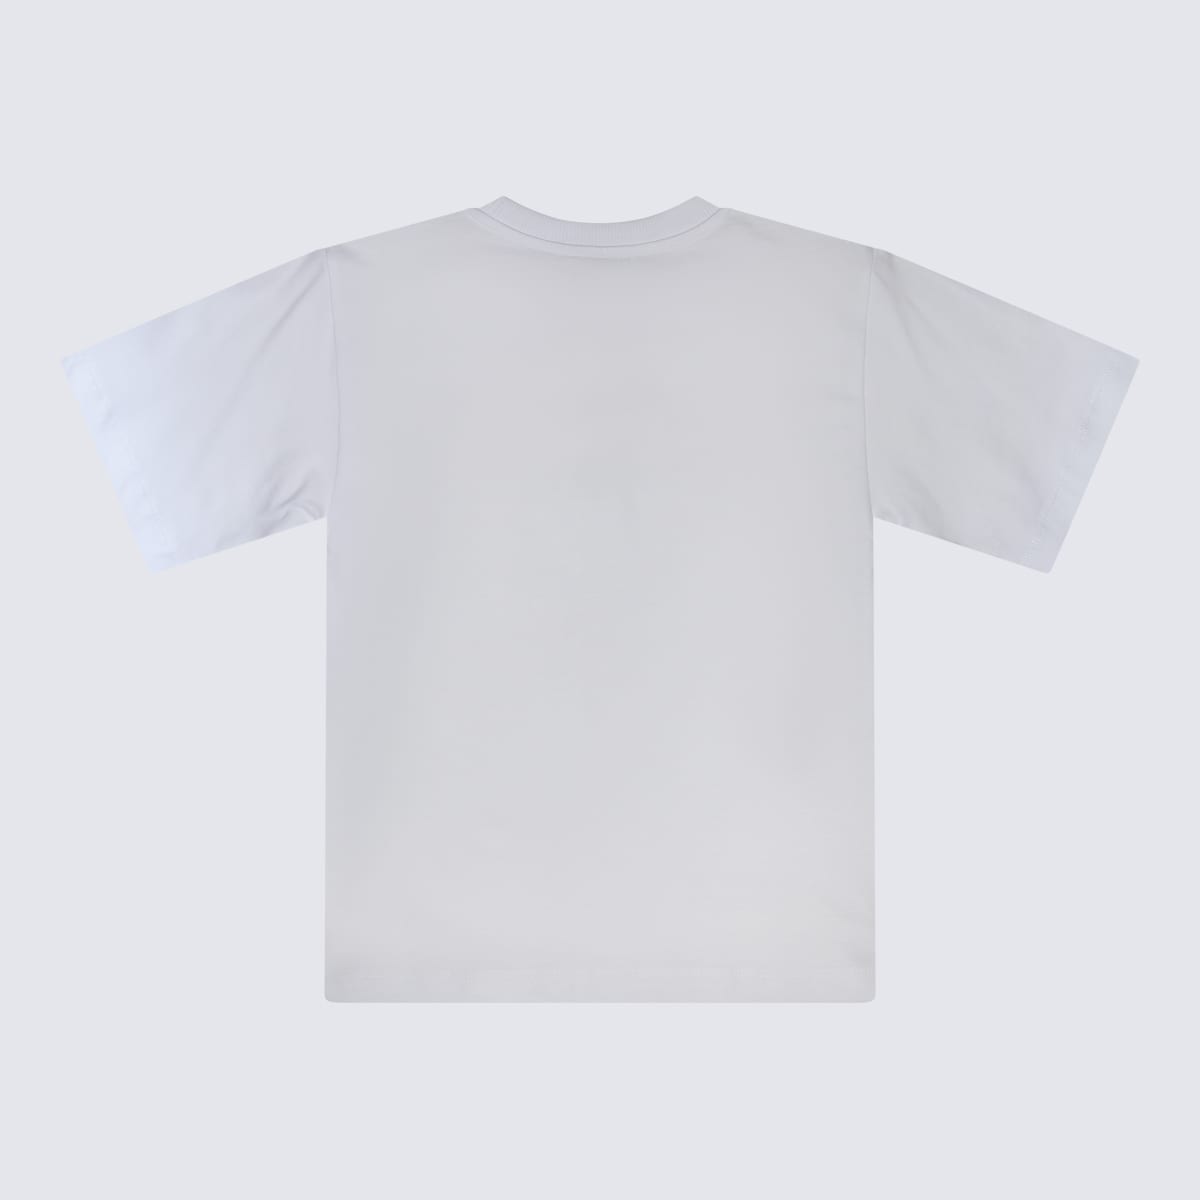 Shop Moschino White Cotton Teddy Bear T-shirt